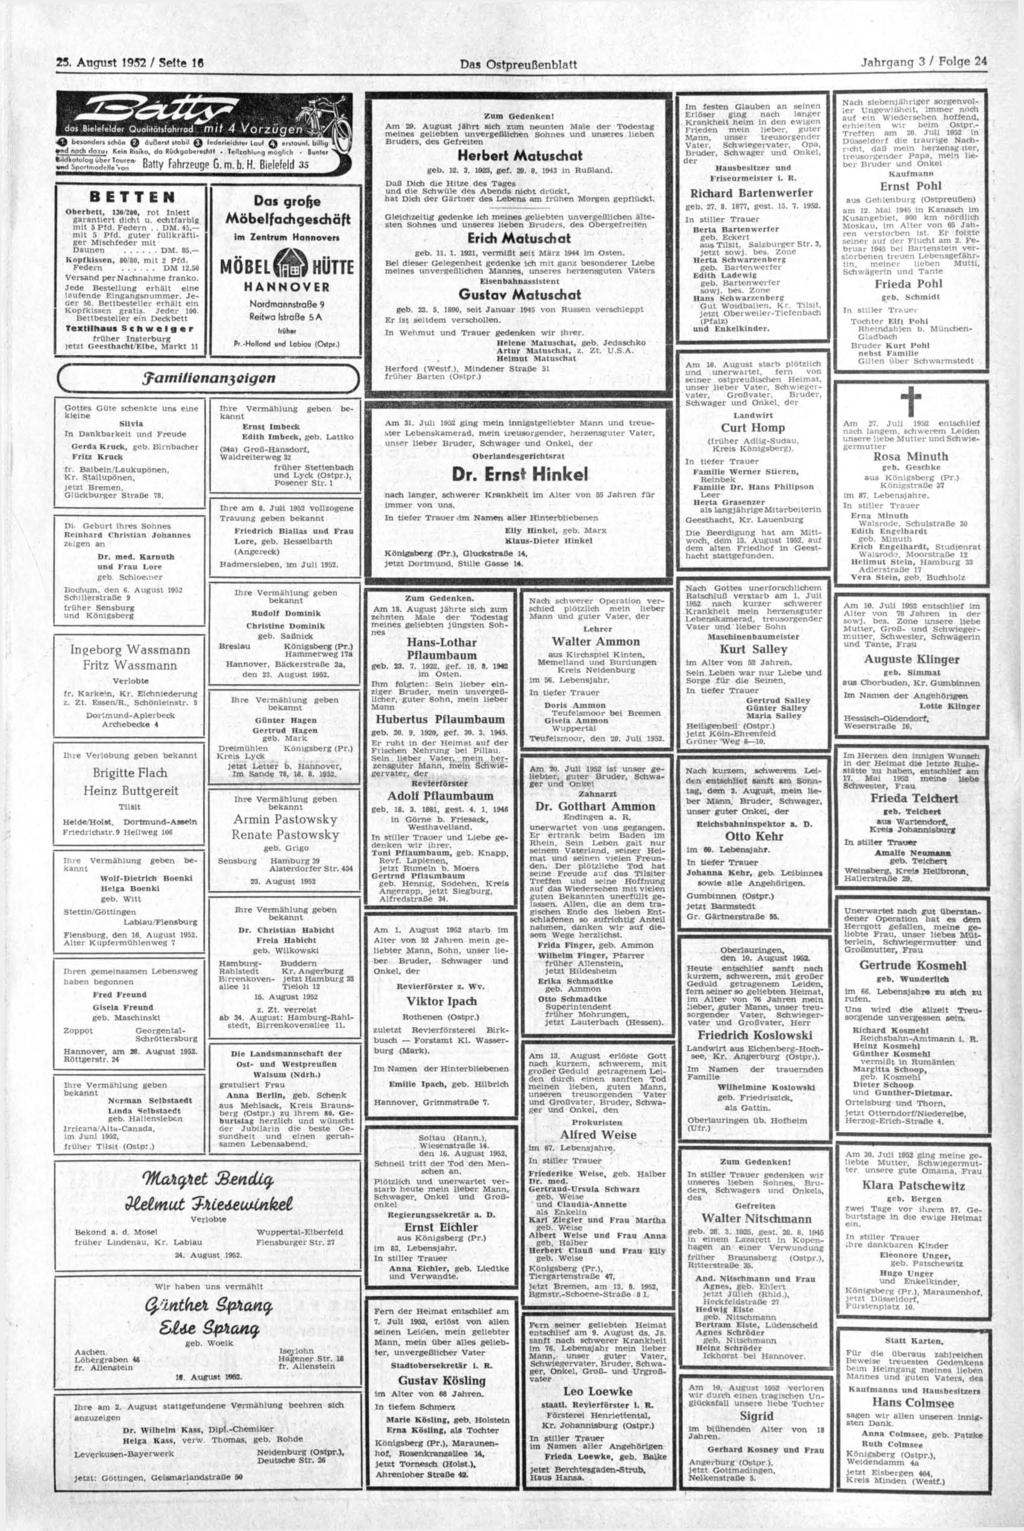 August 1952 Seite 1 Das Ostpreußenblatt Jahrgang 3 Folge 24 dos